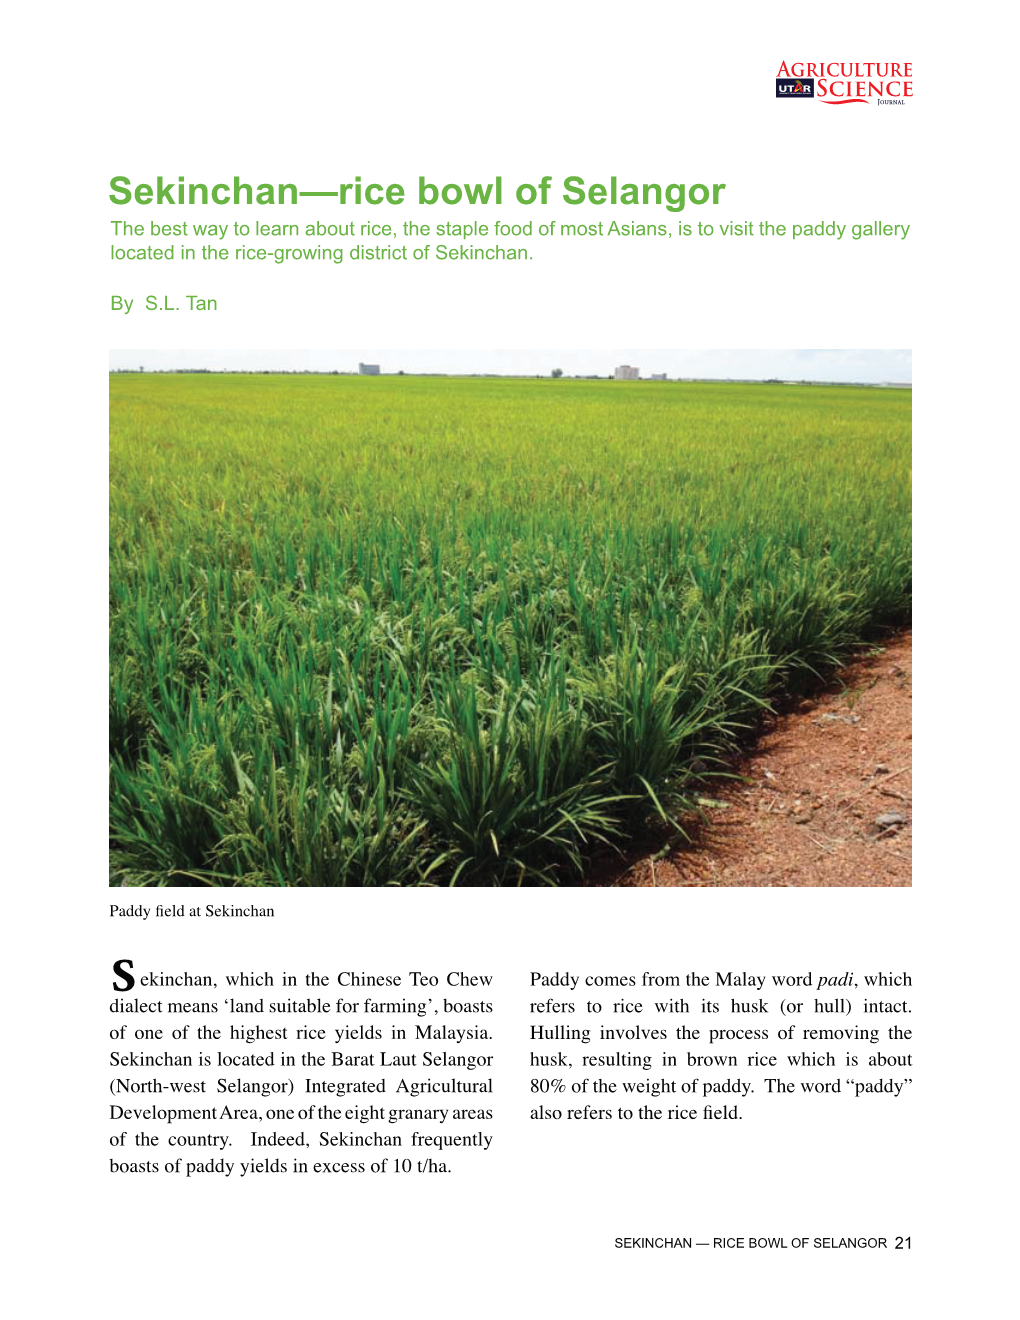 Sekinchan—Rice Bowl of Selangor